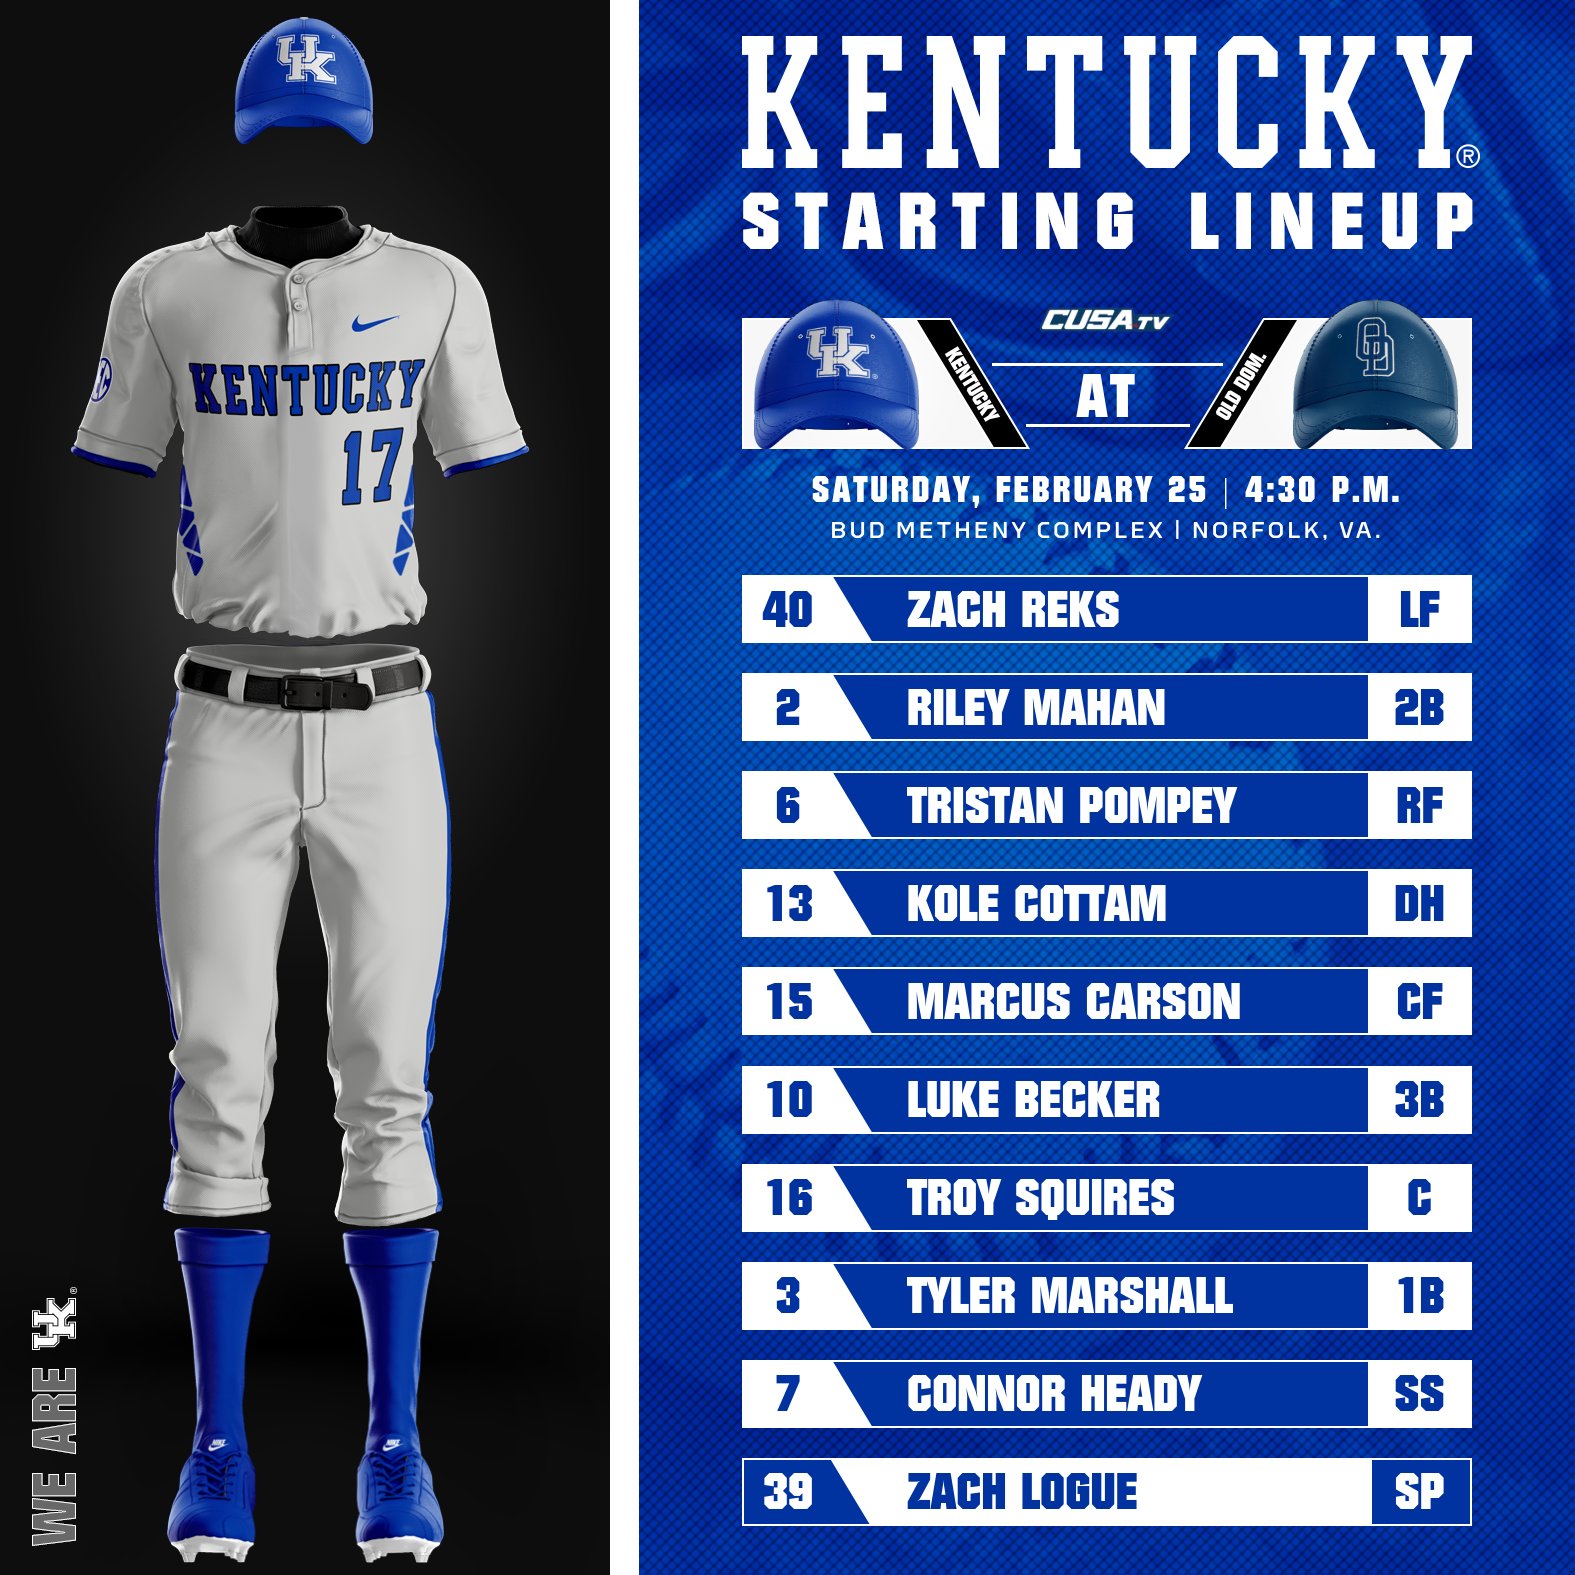 Kentucky Baseball on X: Today's starting lineup and uniform look